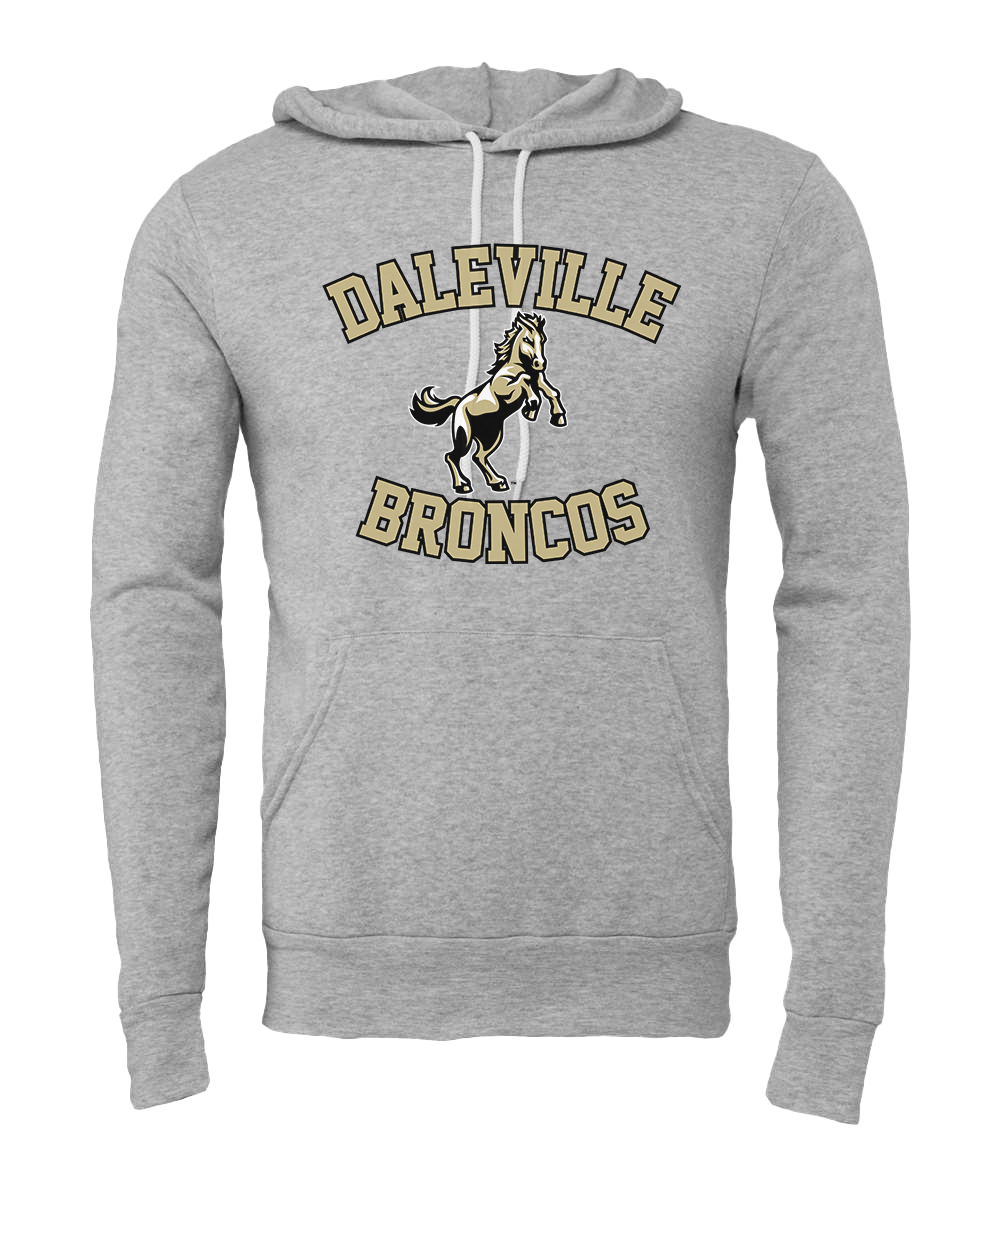 Daleville Broncos Hooded Sweatshirt - Athletic Heather